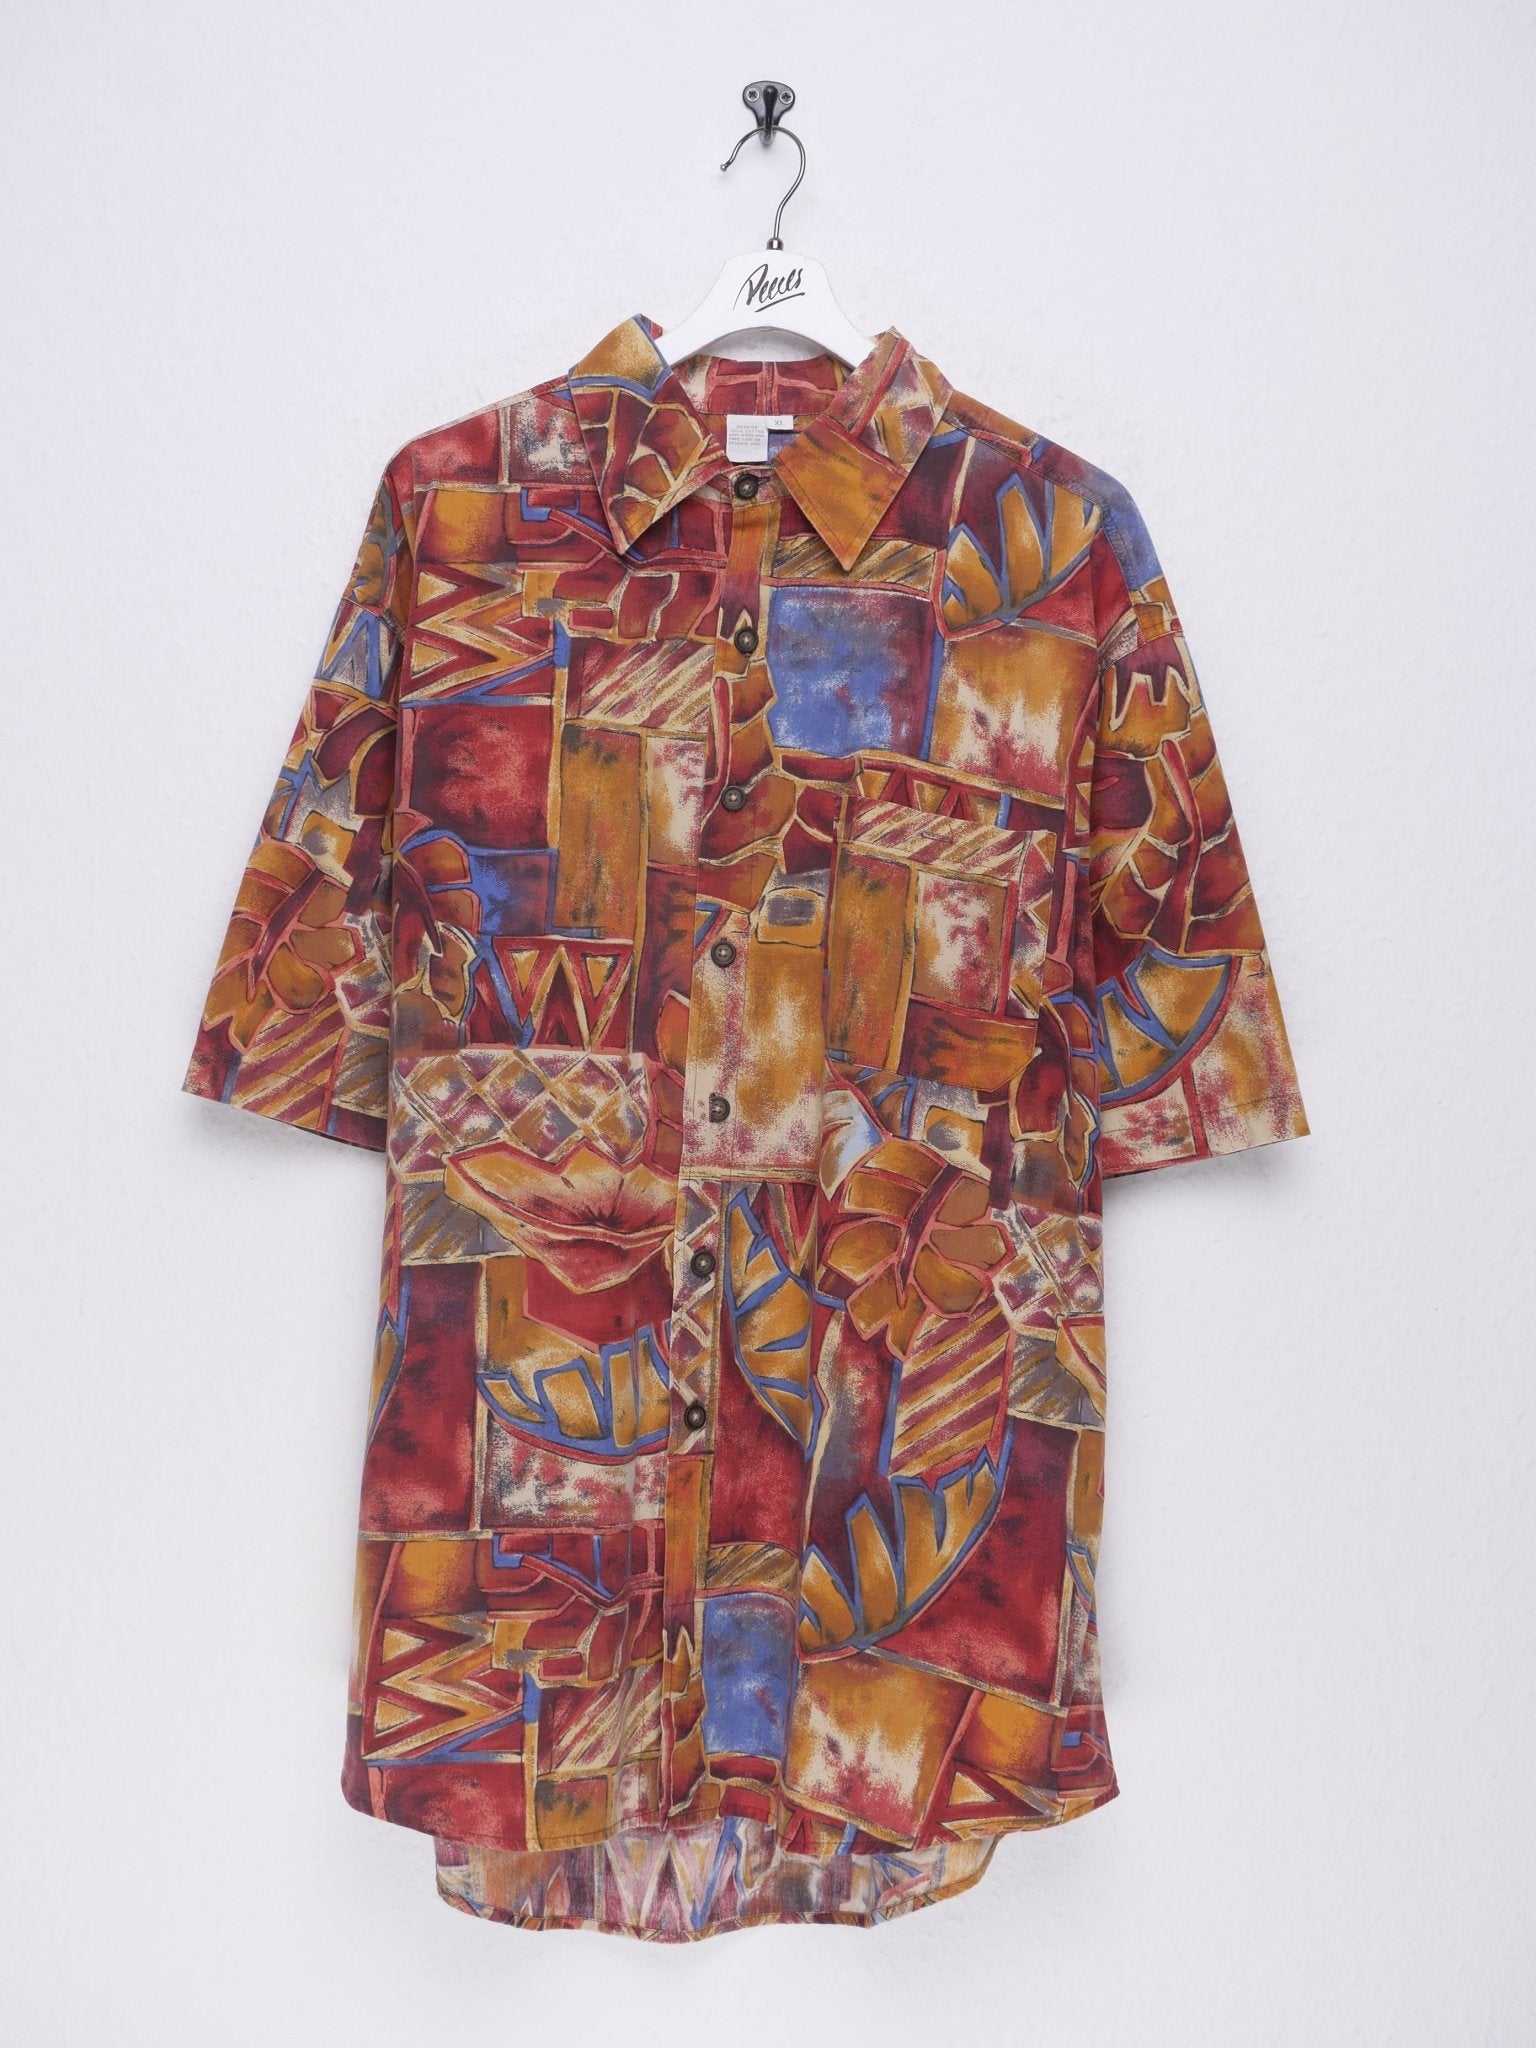 Vintage patterned colorful Kurzarm Hemd - Peeces